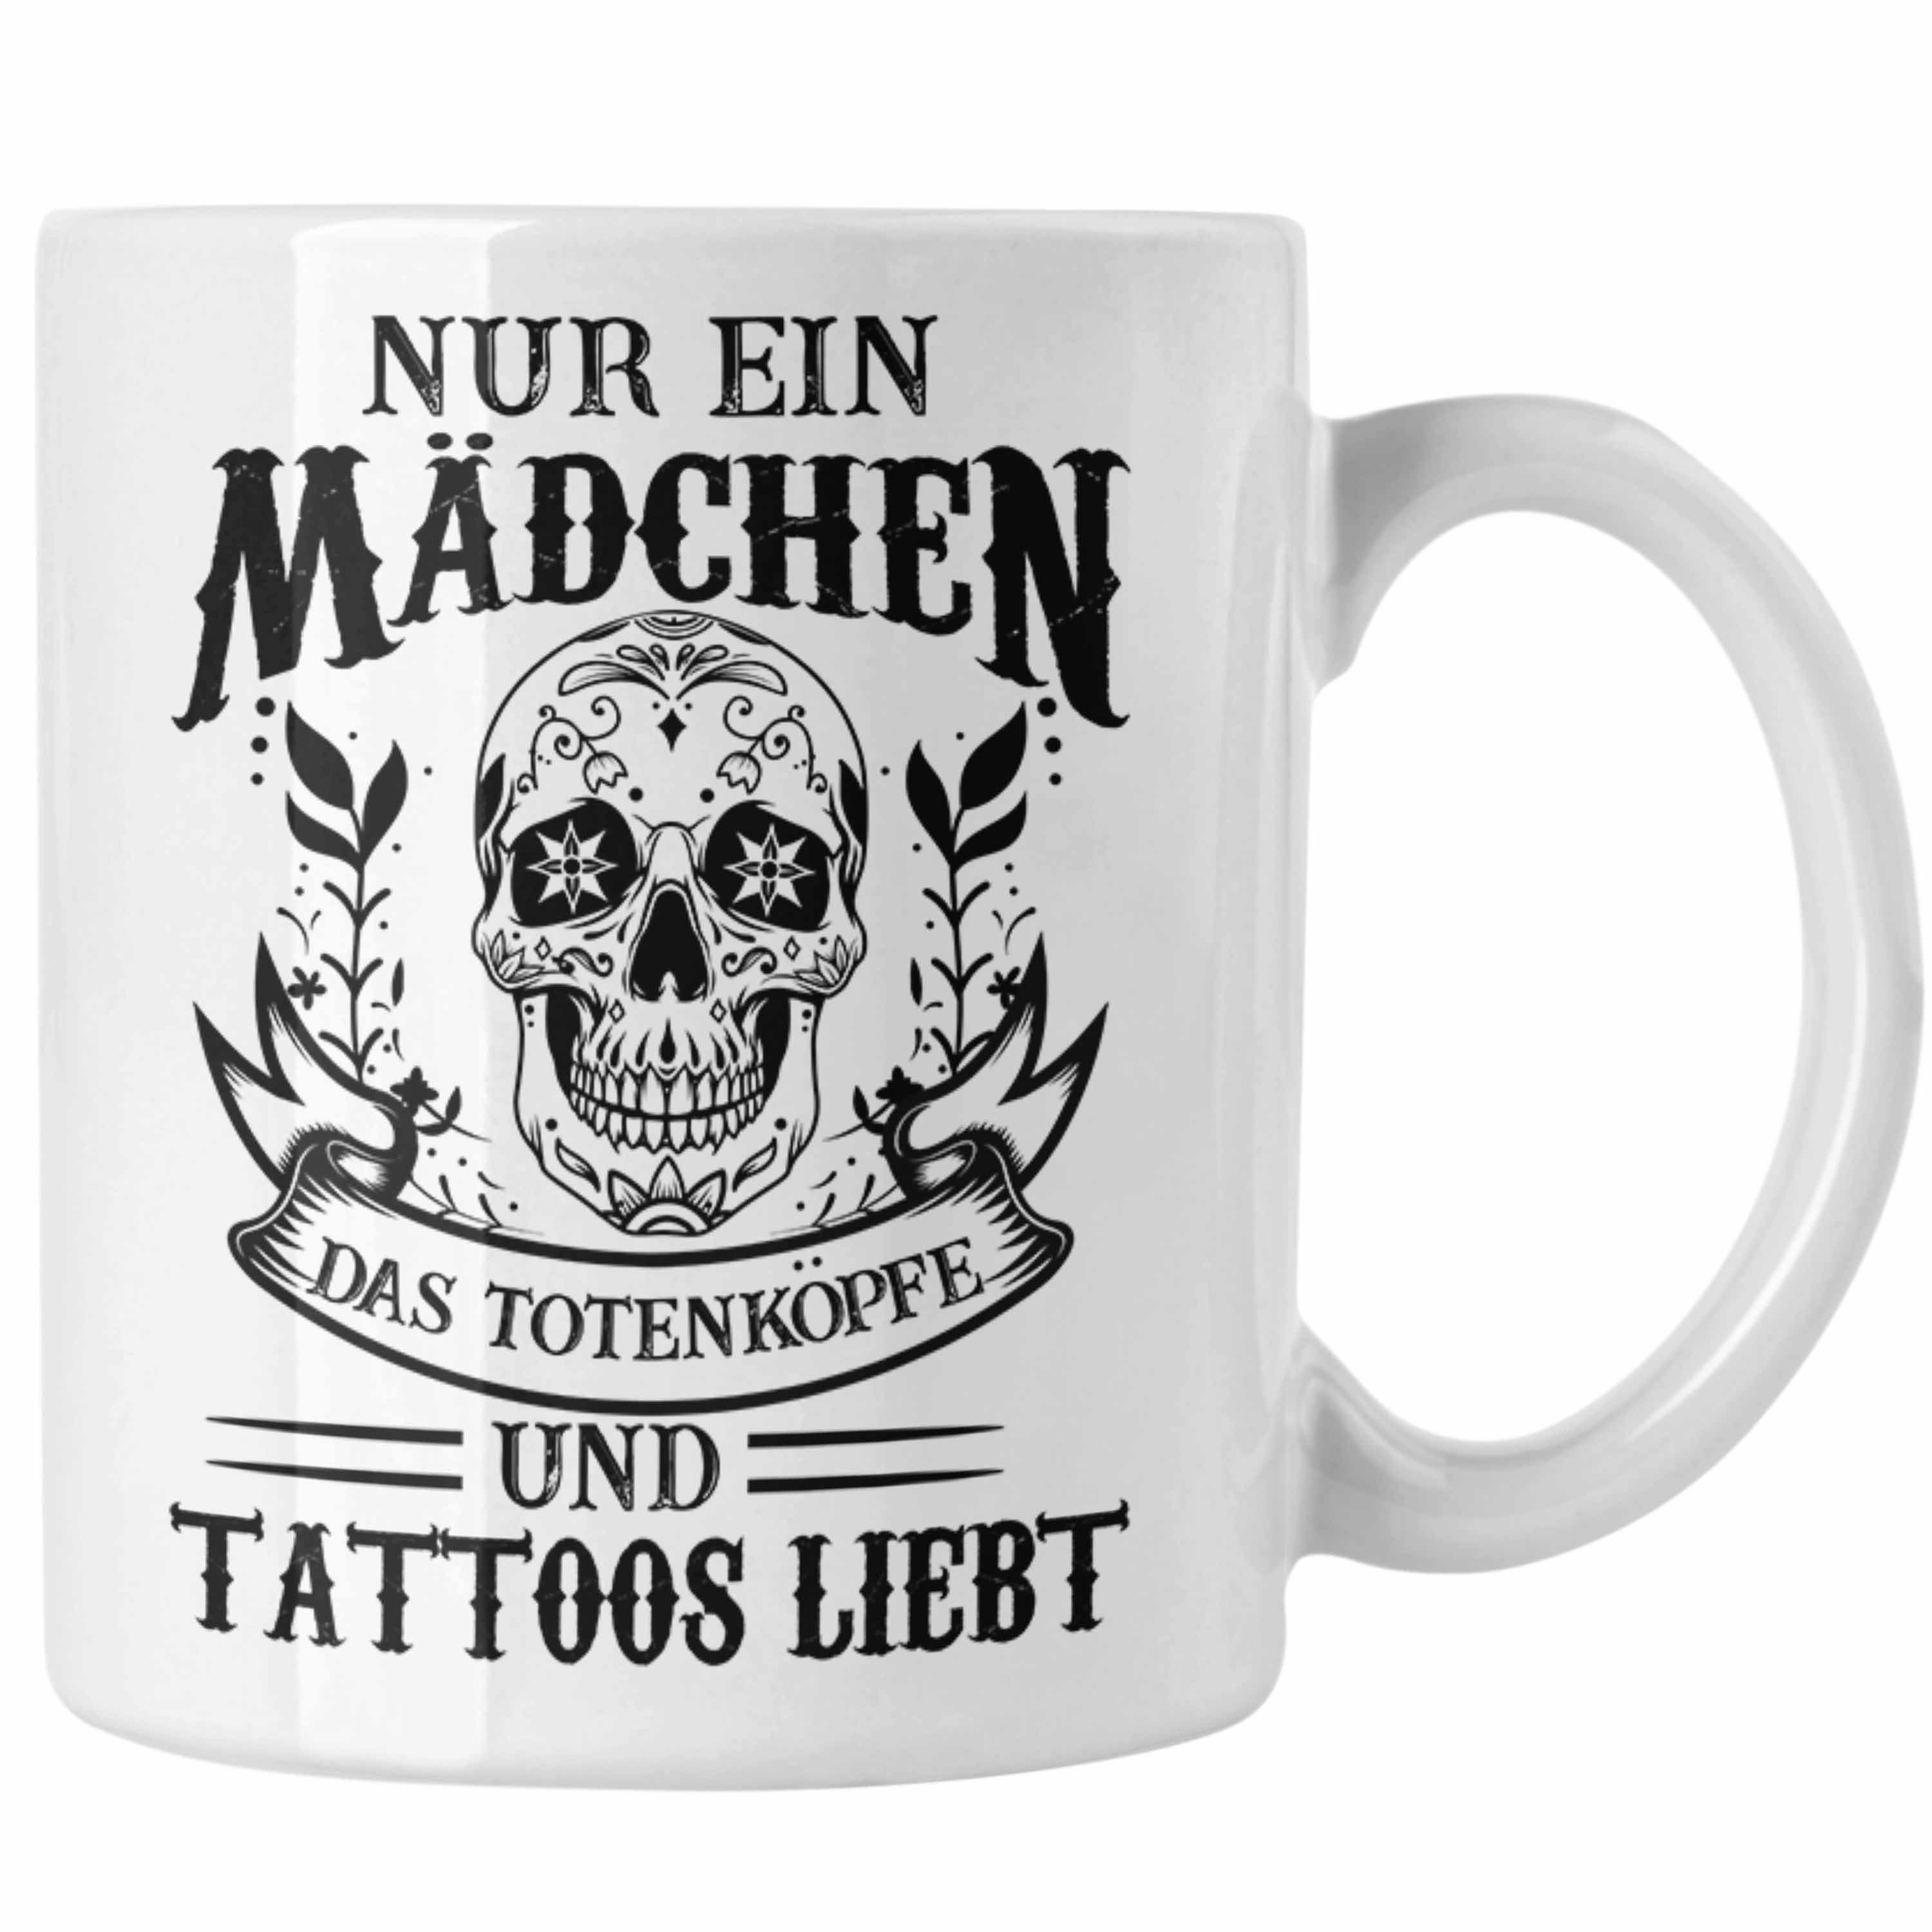 Tassen Frauen Tattoo Tätowiererin Weiss Tasse - Tattoos Tasse Geschenk Kaffeetasse Trendation Trendation Totenkopf